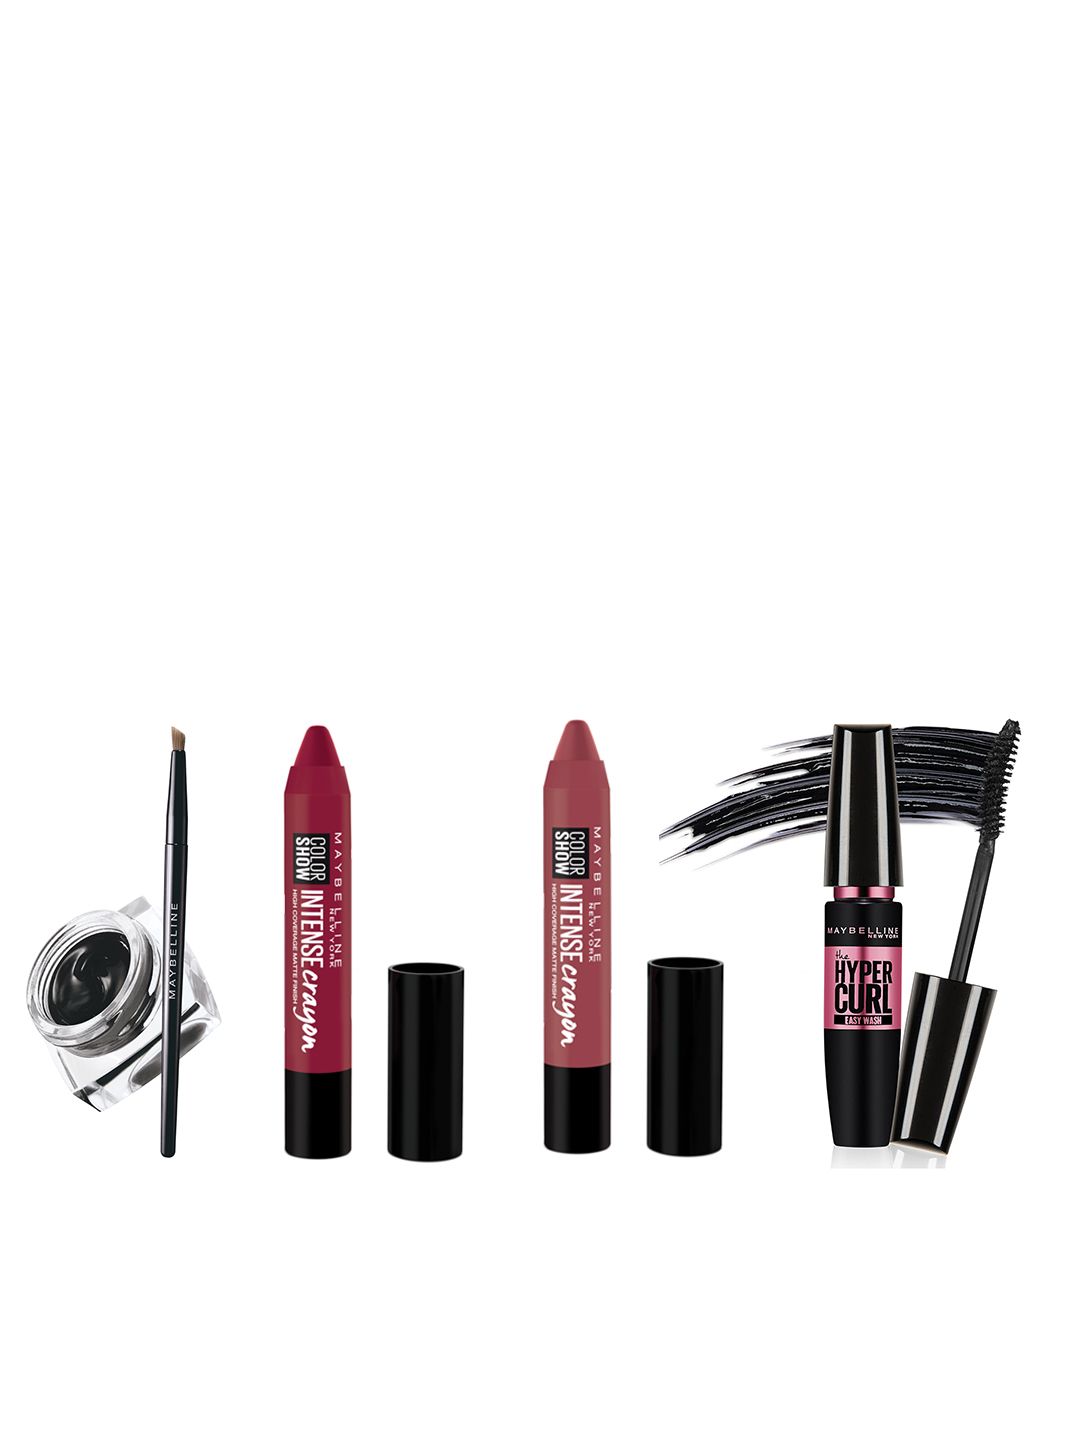 Maybelline New York Set Of Crayon Lipsticks - Gel Liner - Hypercurl Washable Mascara Price in India